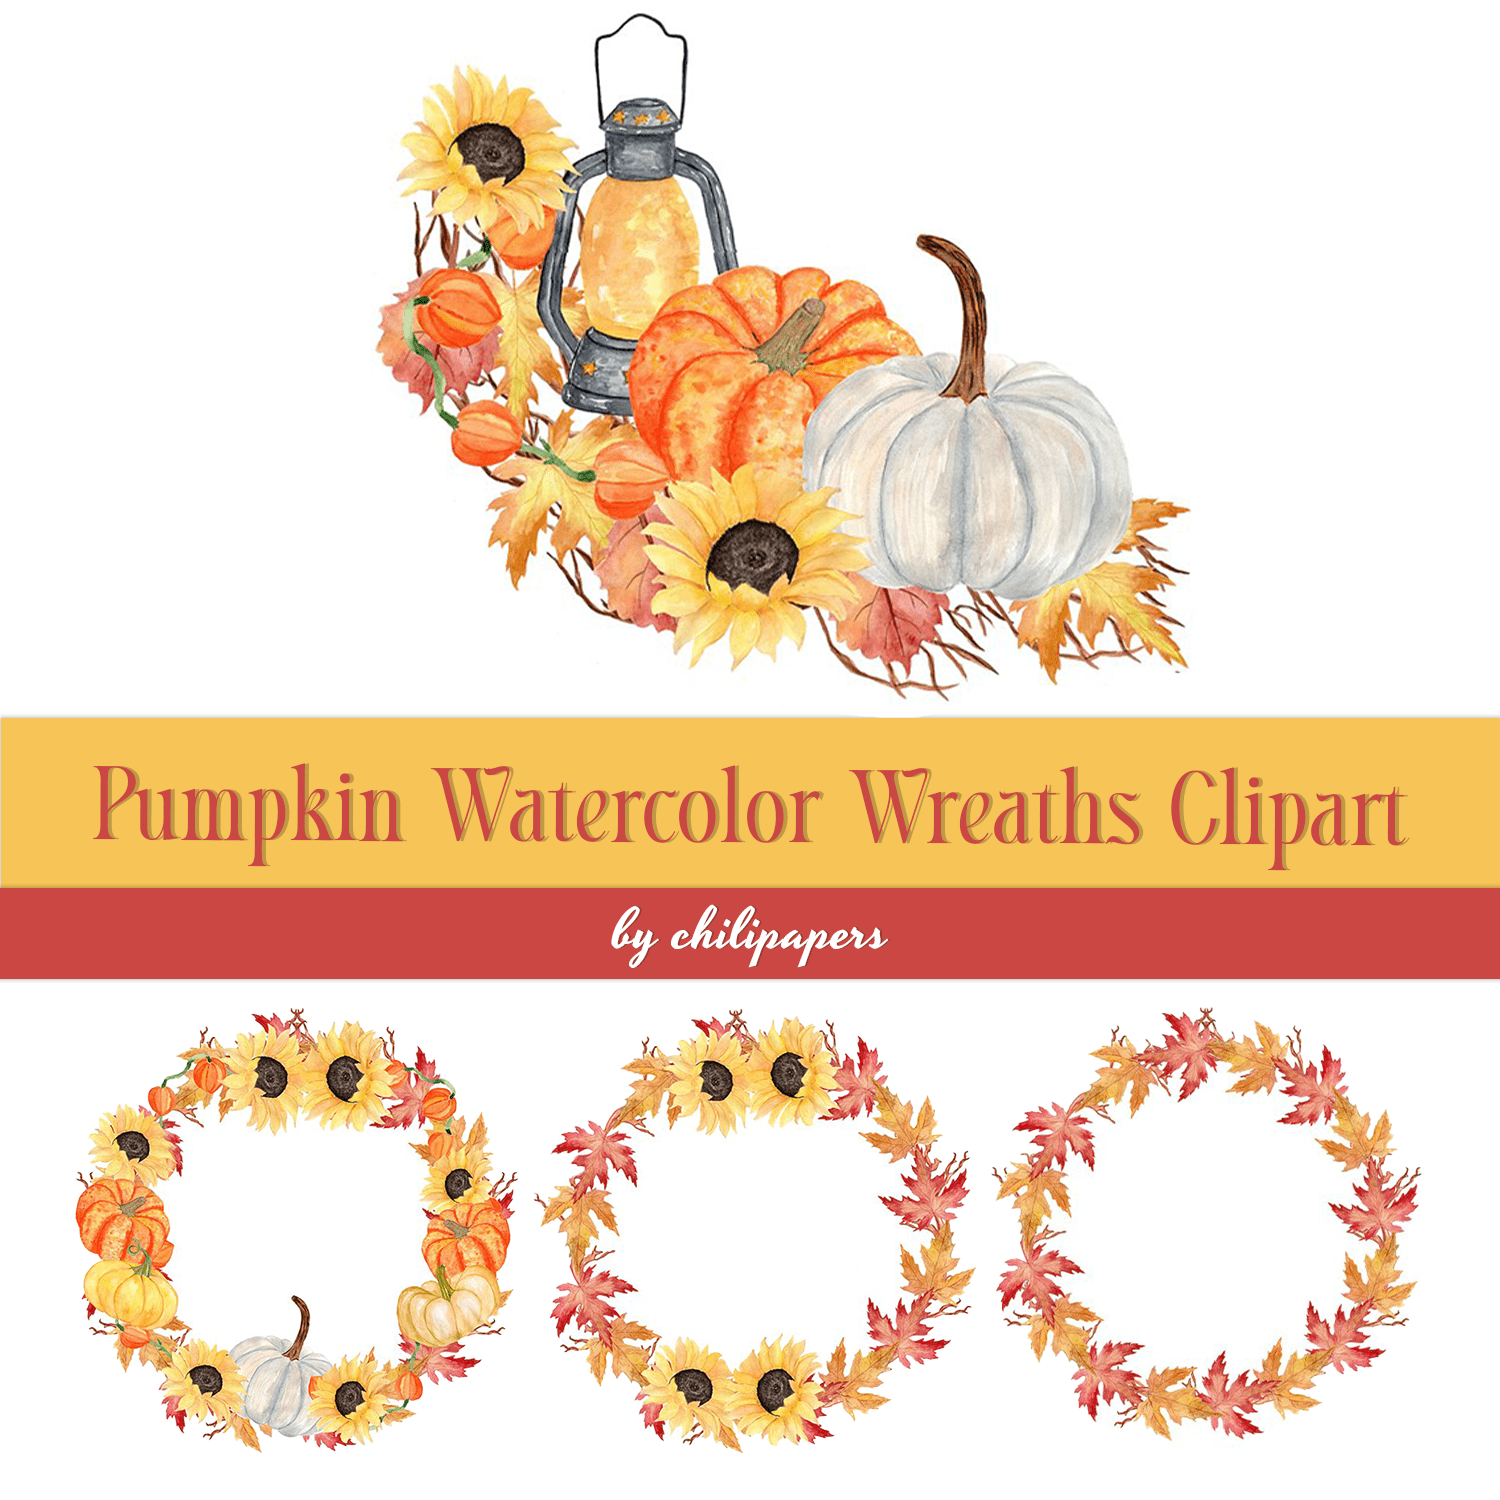 Pumpkin Watercolor Wreaths Clipart.